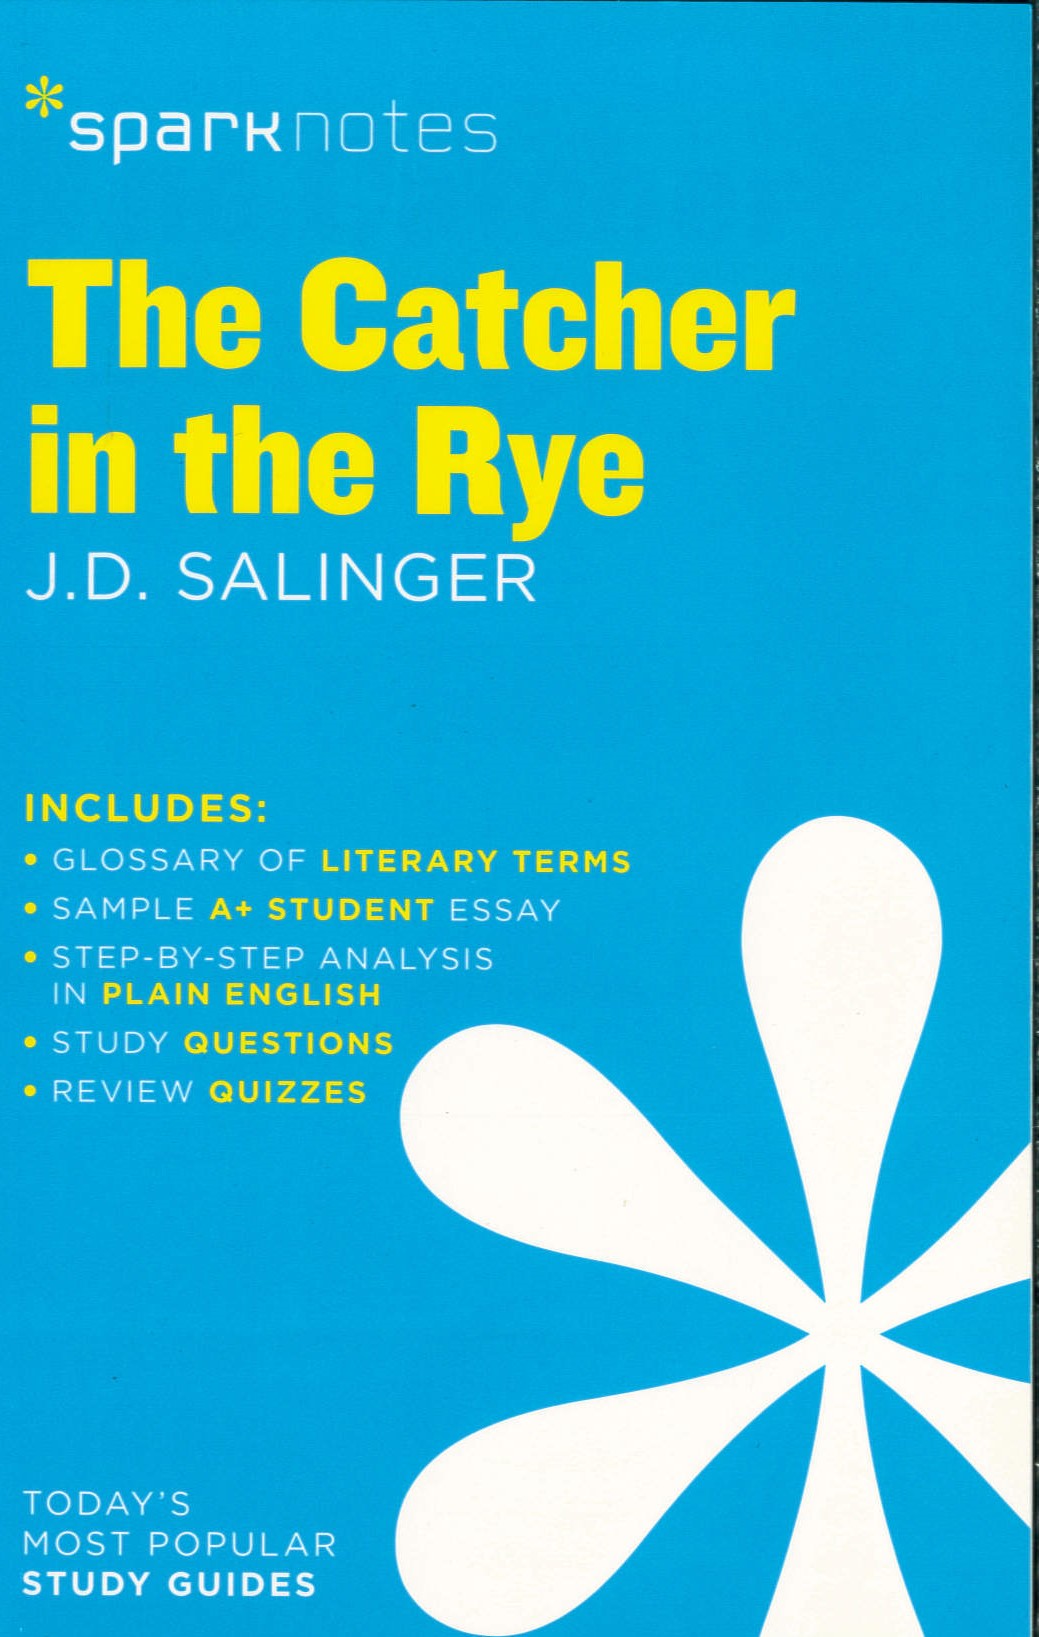 The catcher in the rye : J.D. Salinger